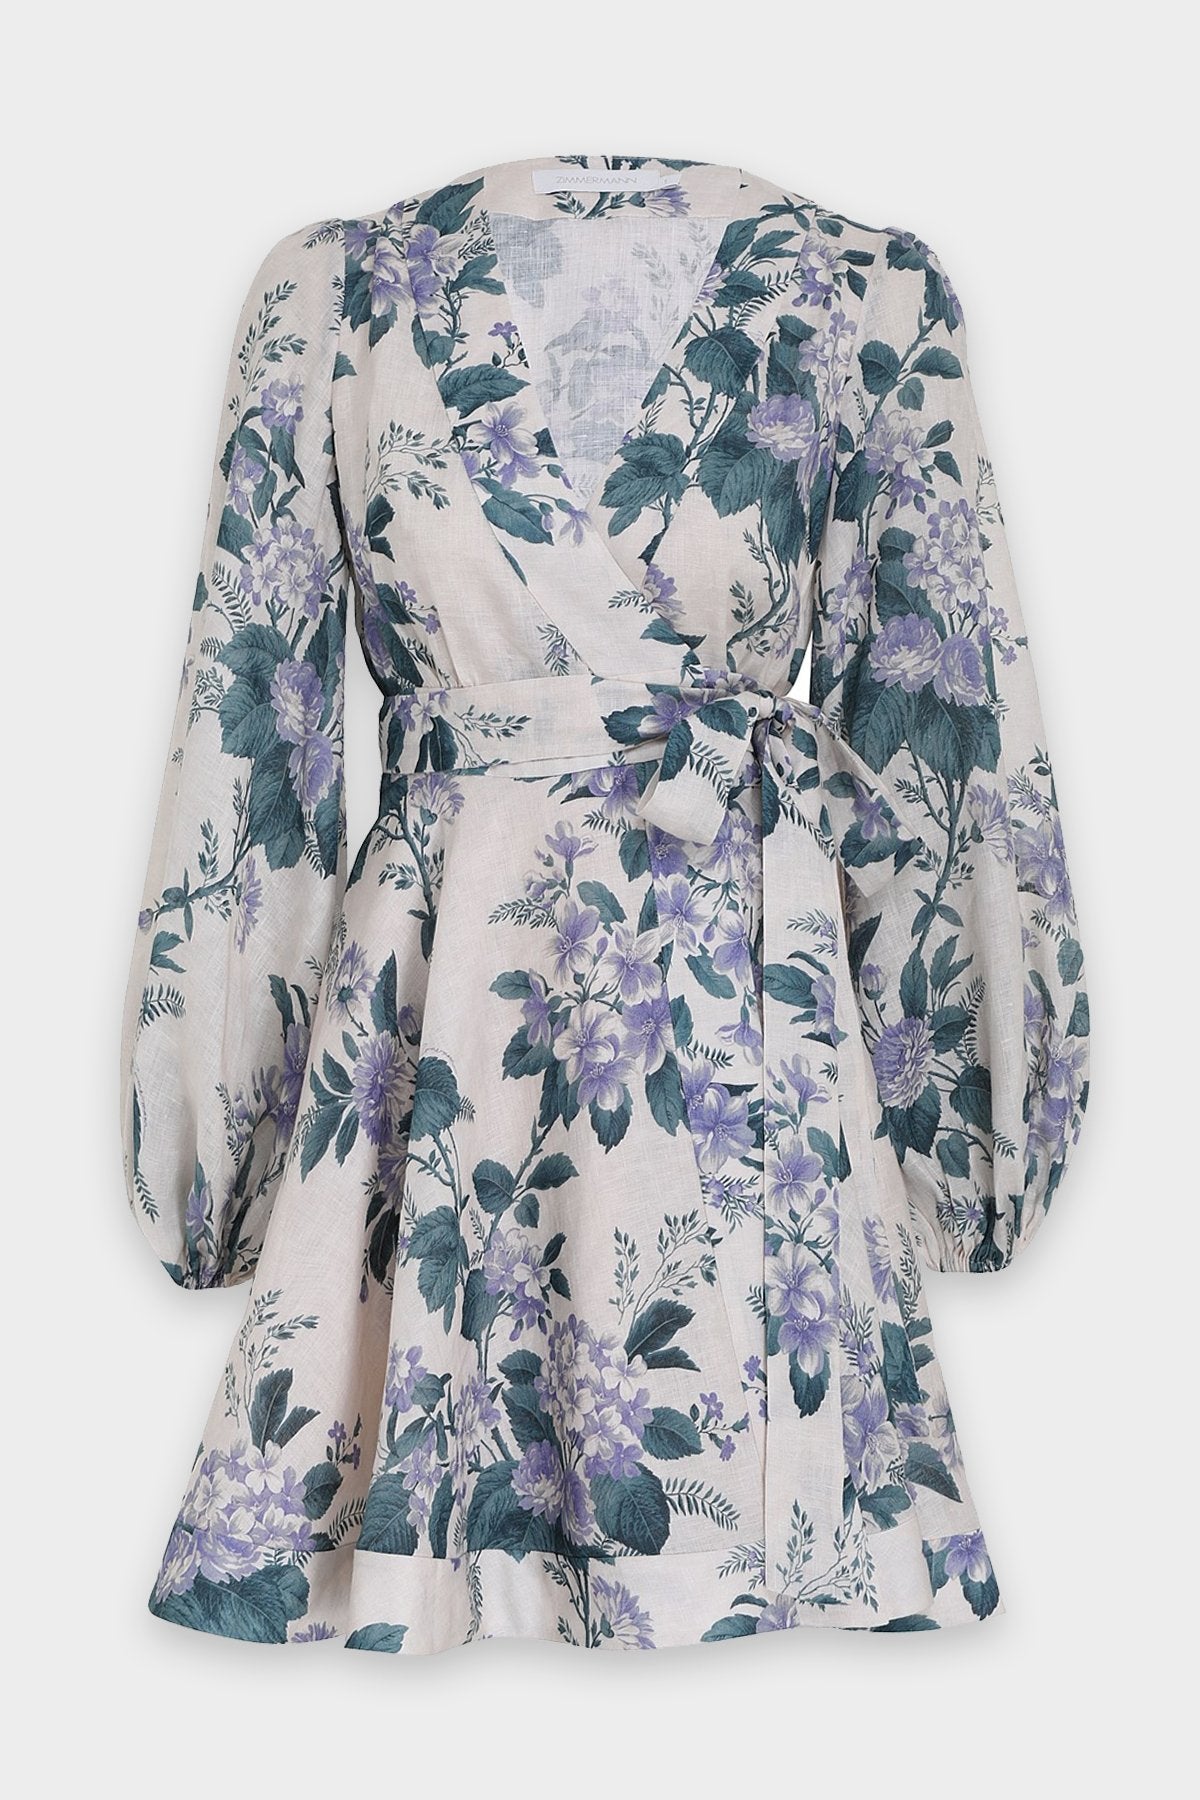 Cassia Wrap Short Dress in Hydrangea Floral - shop-olivia.com